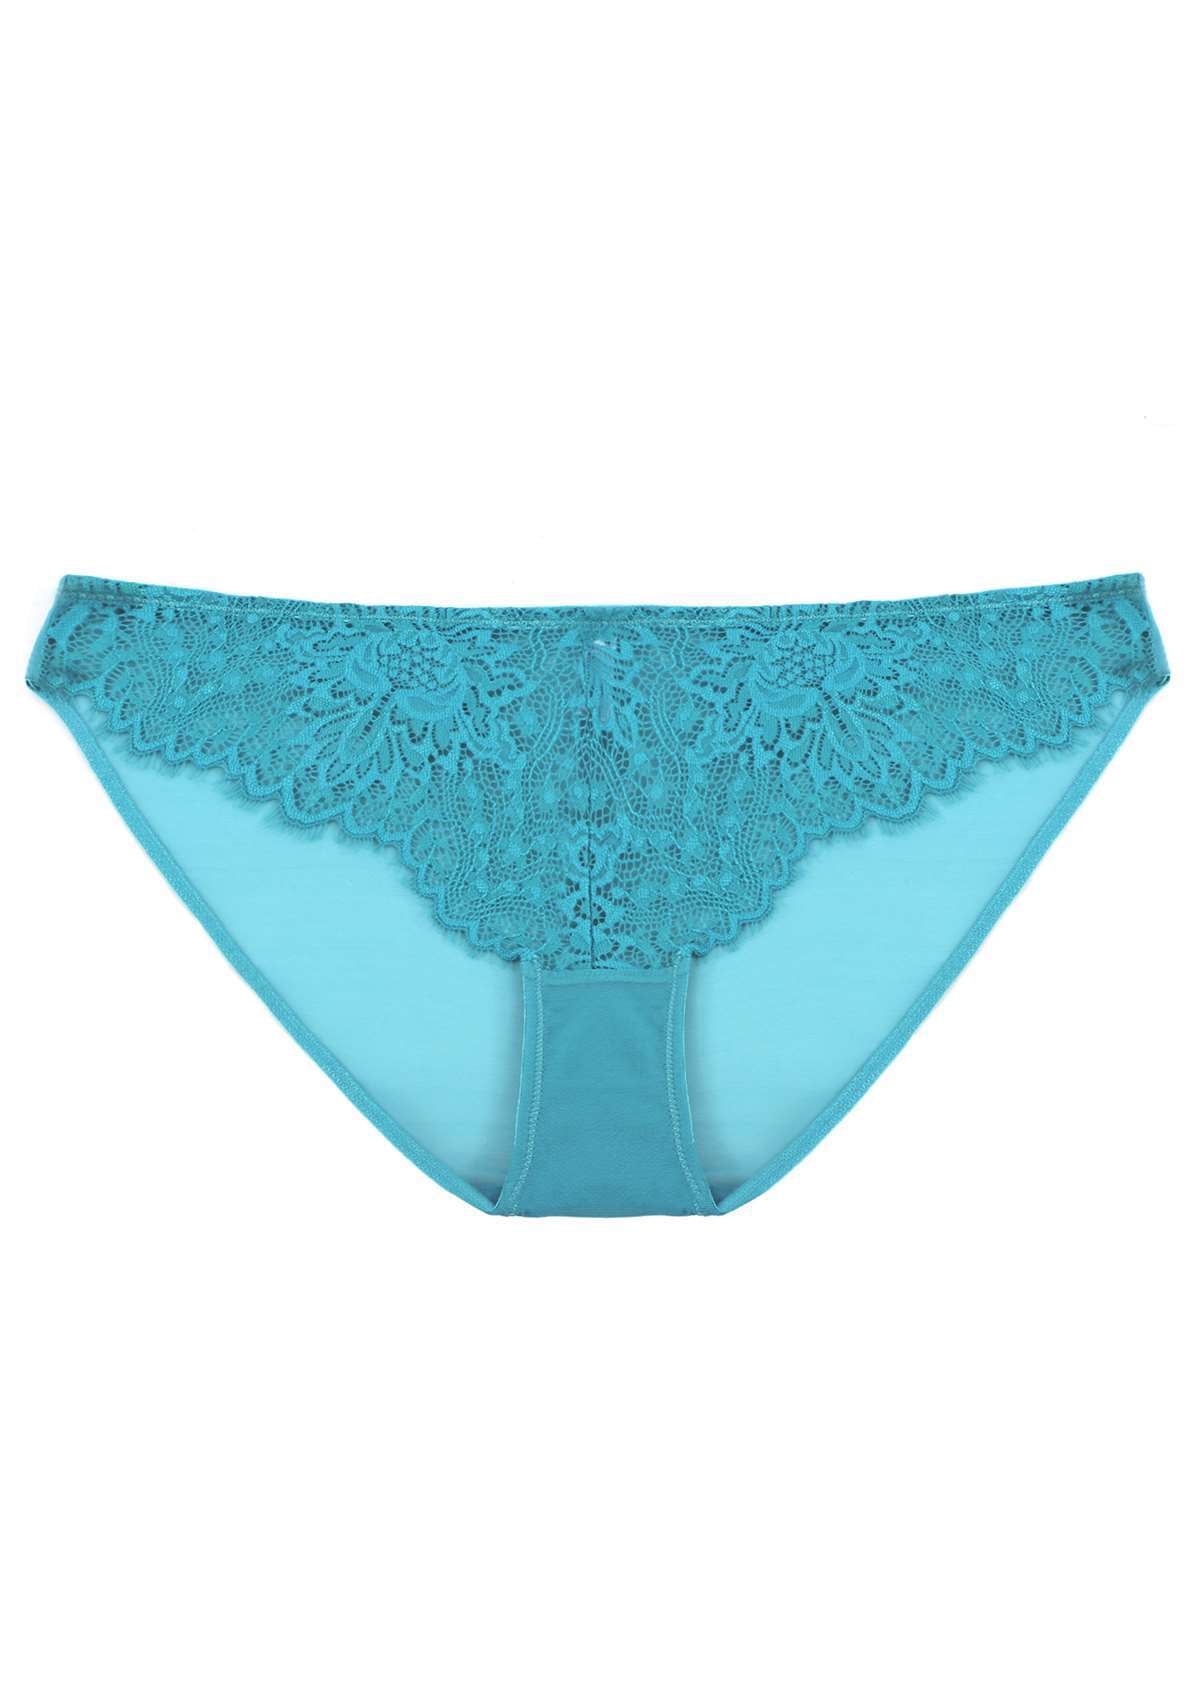 HSIA Sunflower Exquisite Horizon Blue Lace Bikini Underwear - L / High-Rise Brief / Horizon Blue